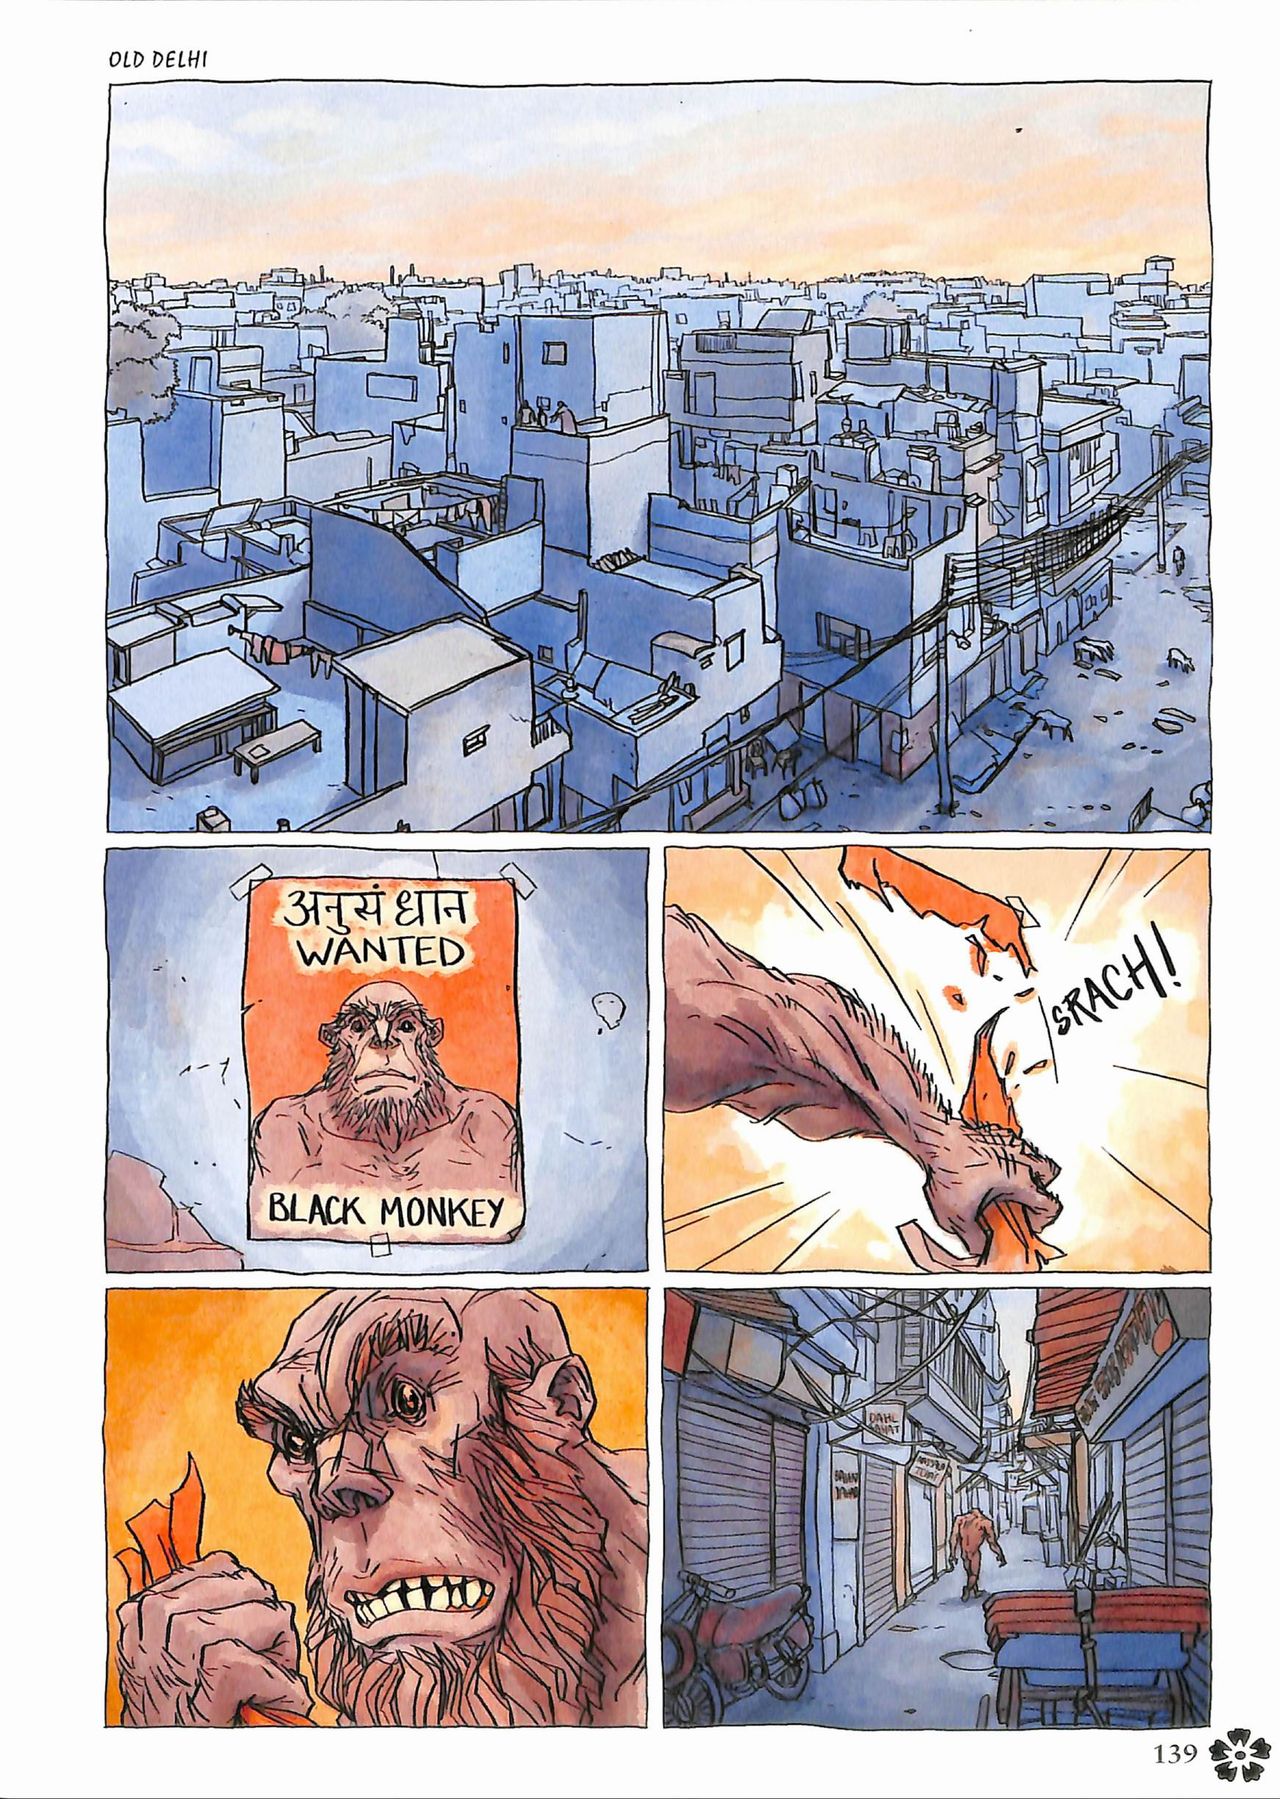 Kama Sutra en bandes dessinées - Kama Sutra with Comics numero d'image 139